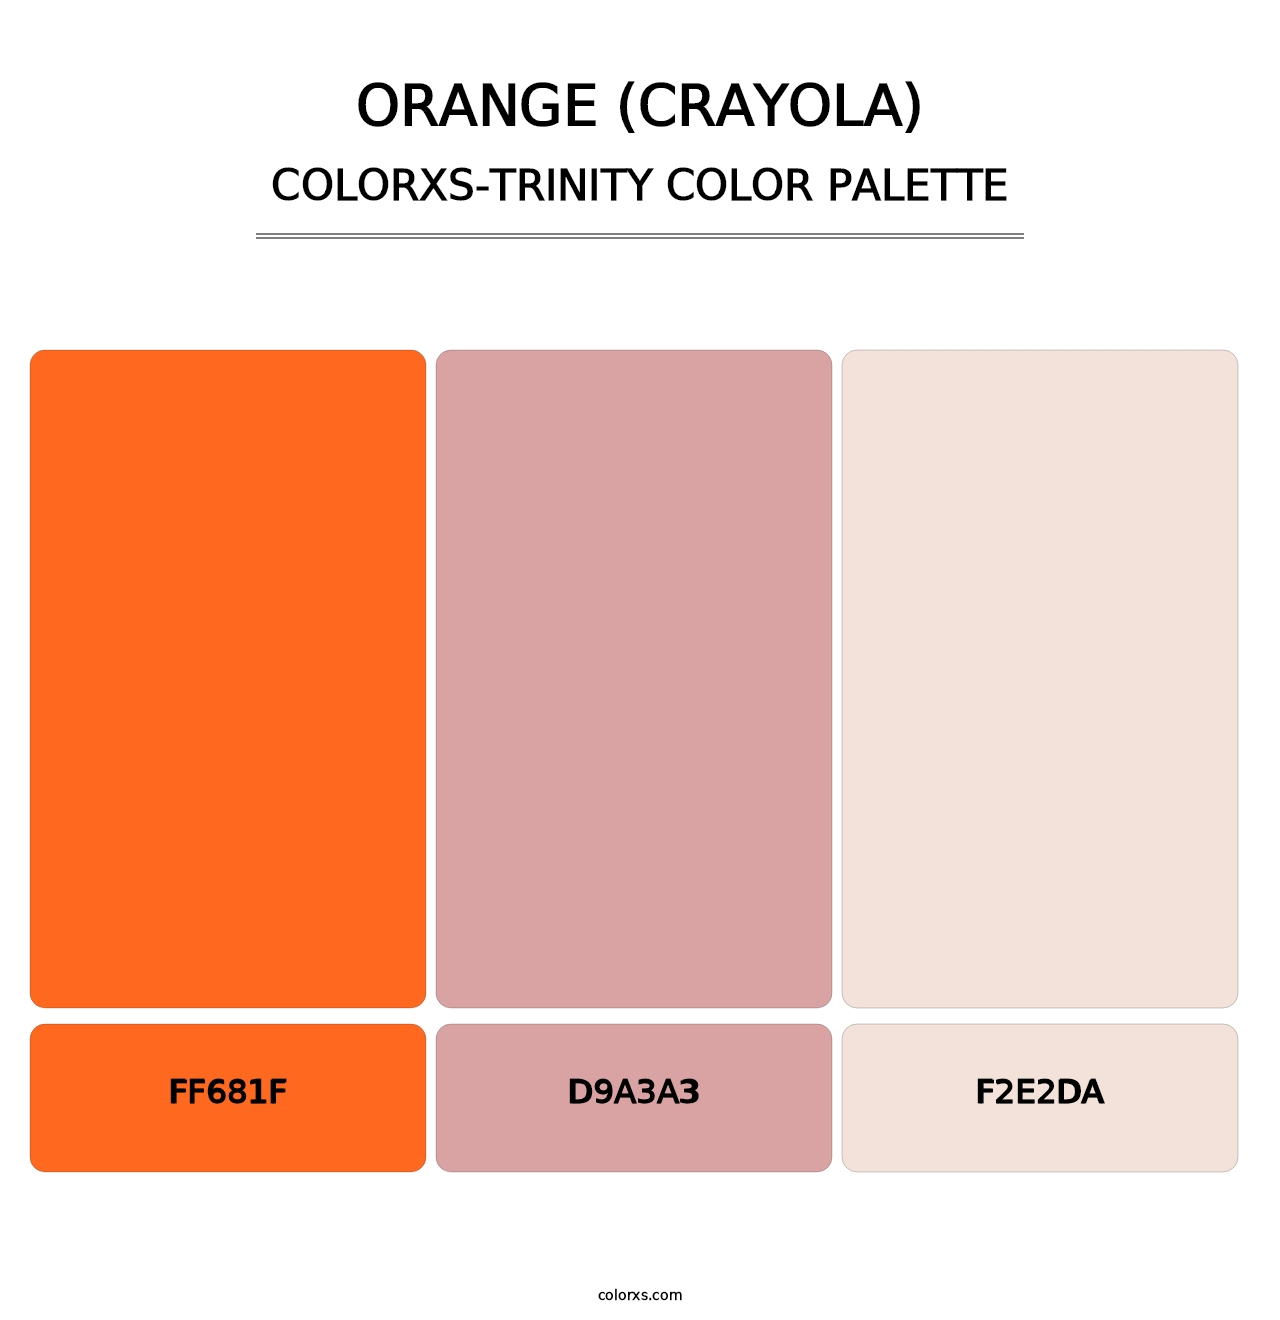 Orange (Crayola) - Colorxs Trinity Palette